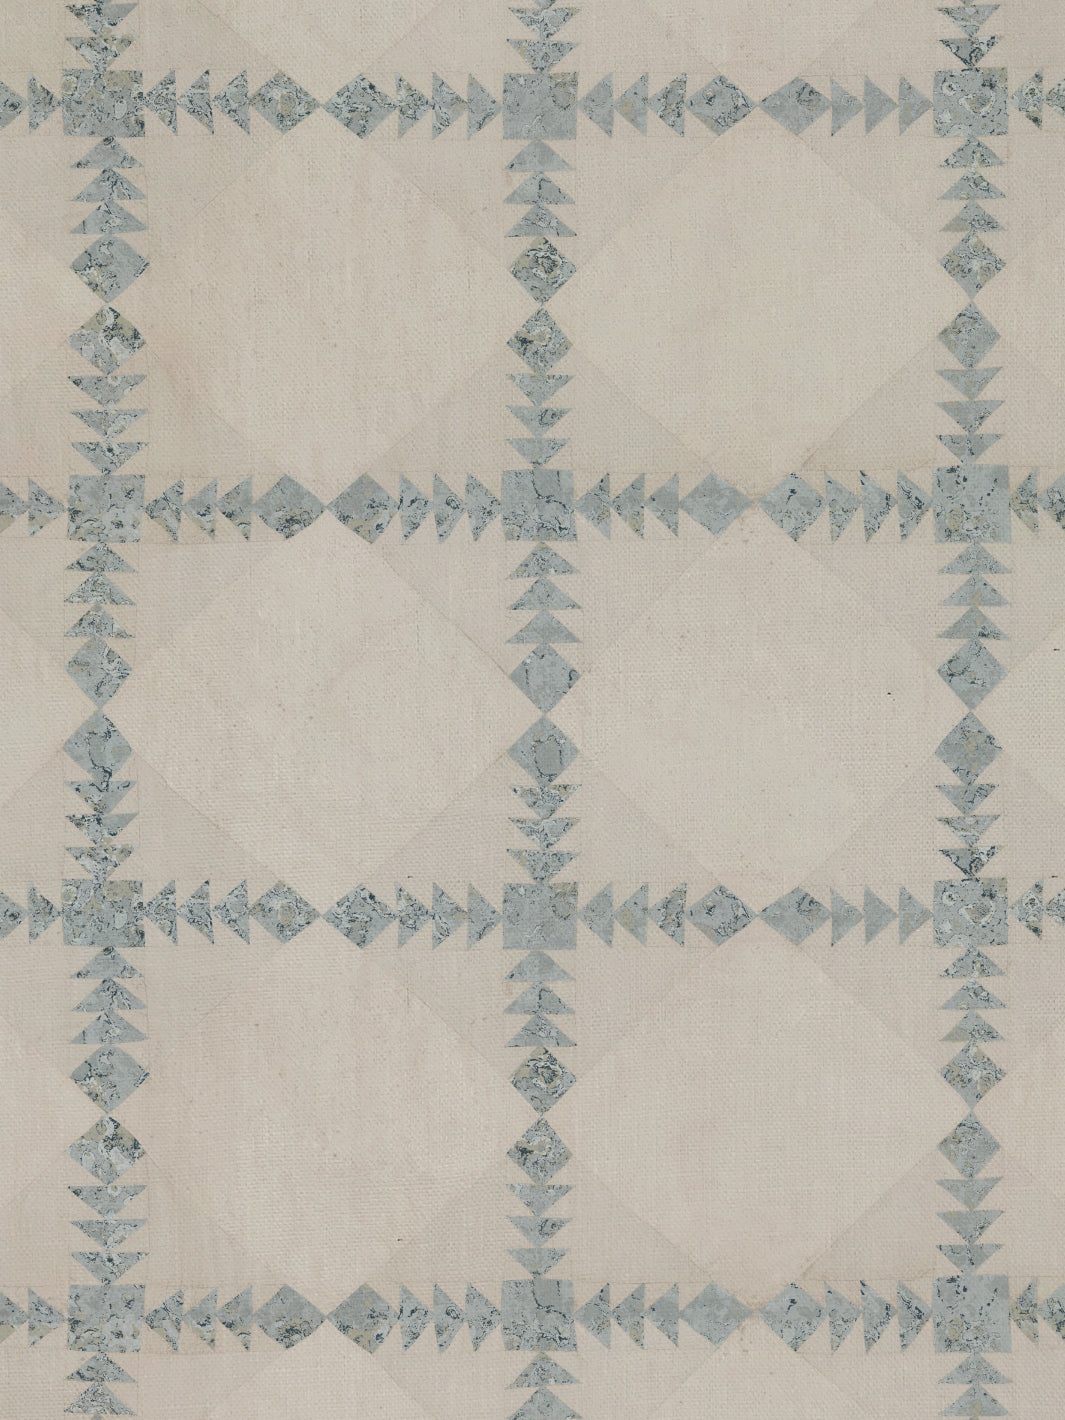 'Borden' Linen Fabric by Nathan Turner - Aqua